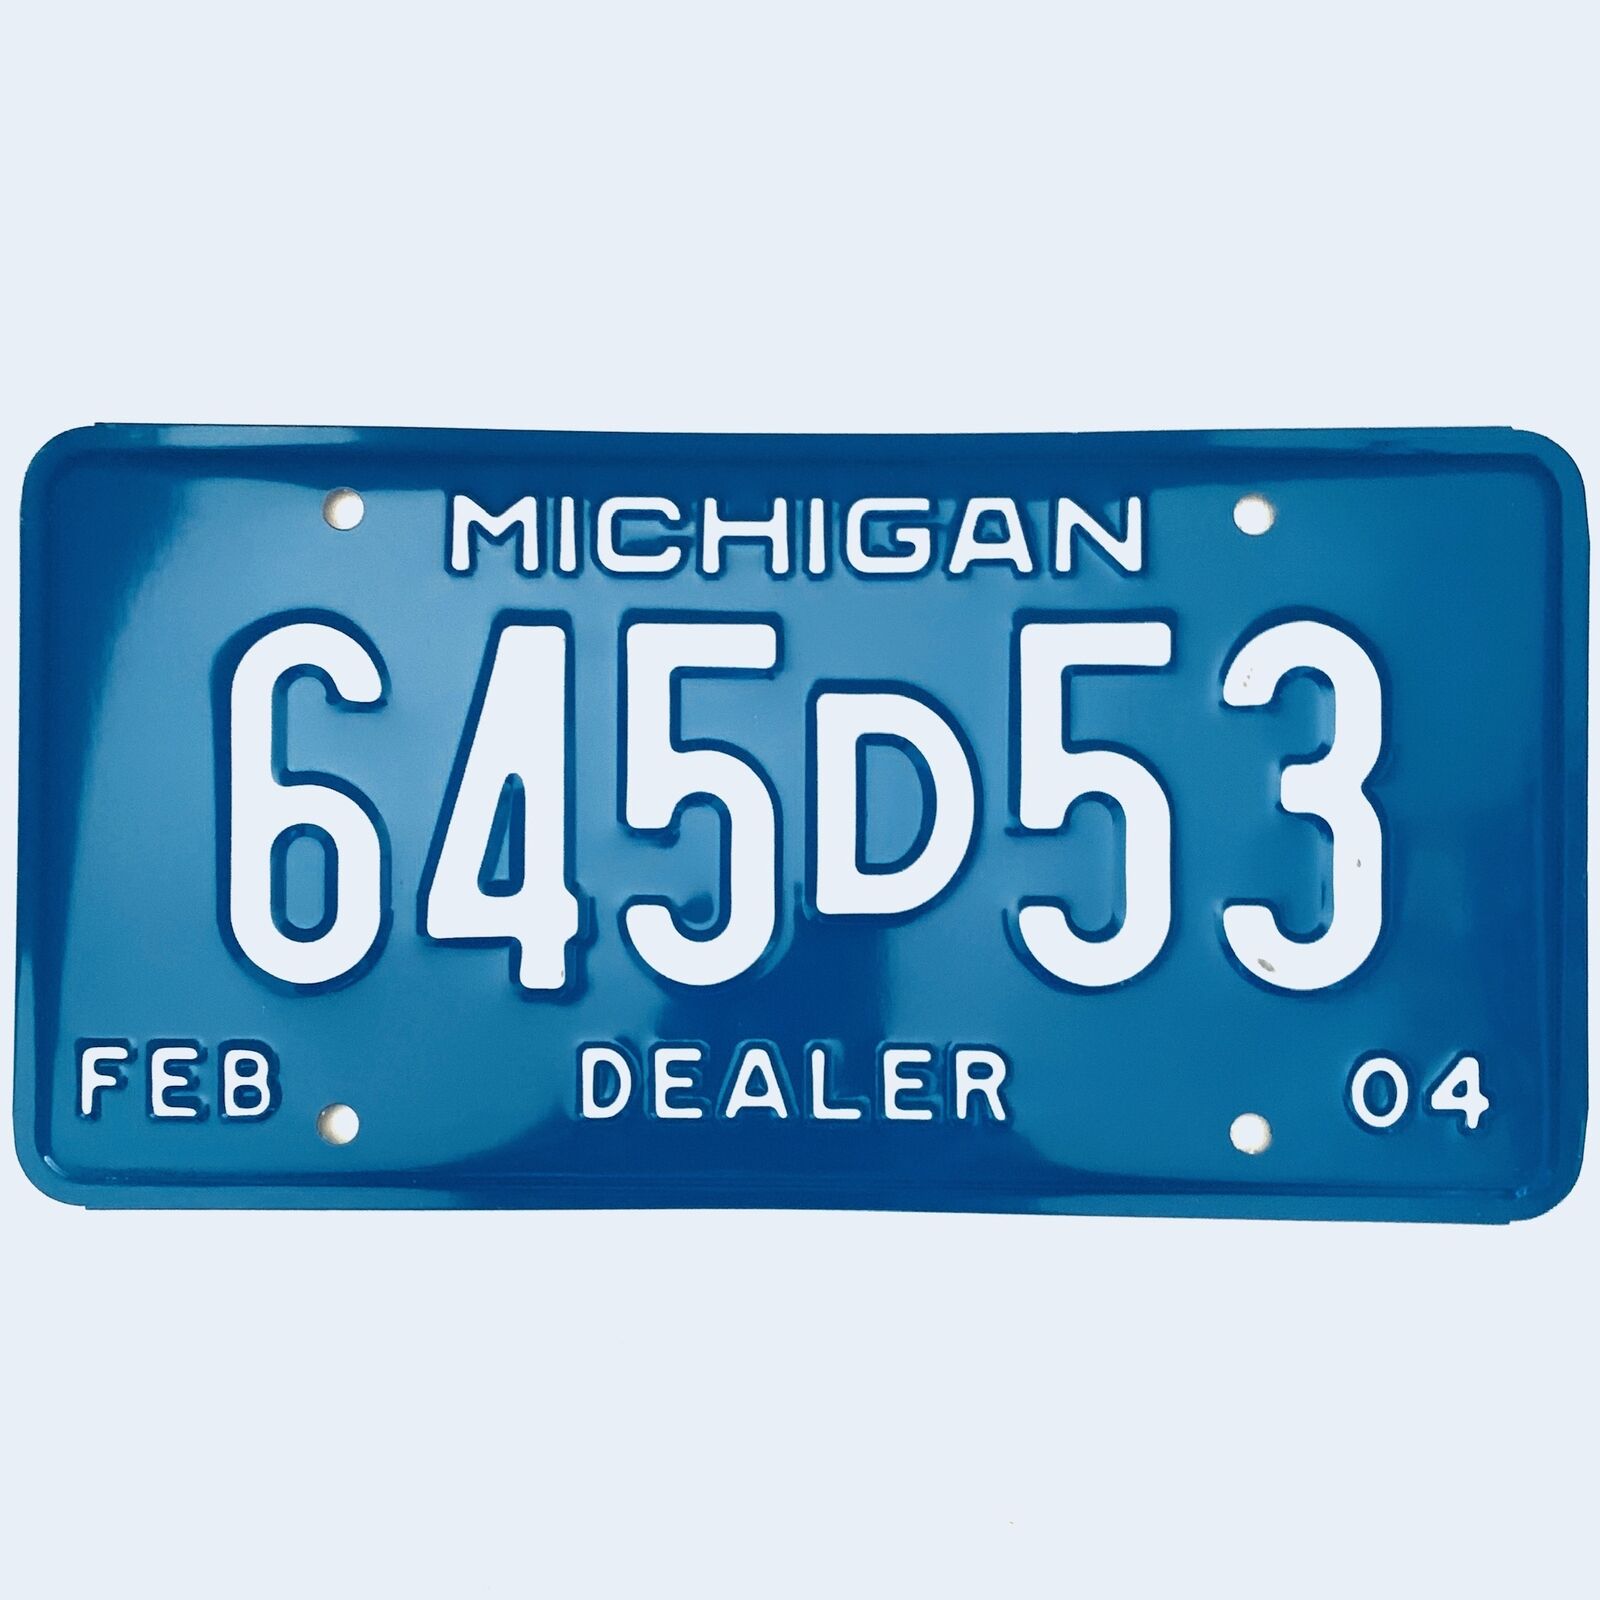 2004 United States Michigan Base Dealer License Plate 645d53